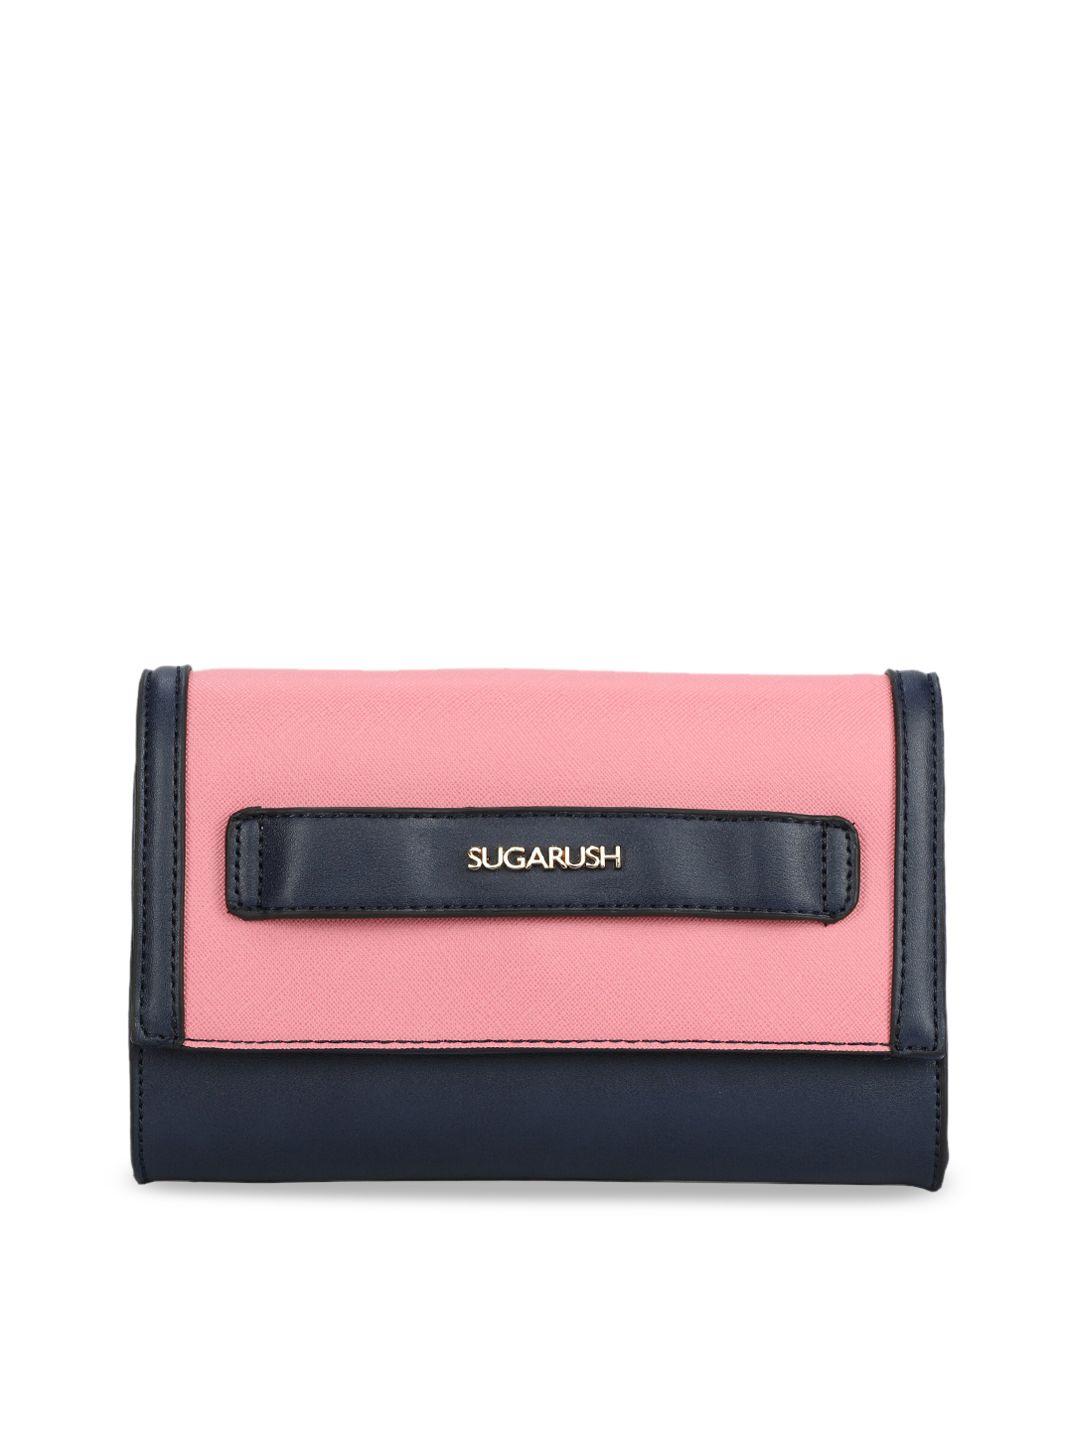 sugarush navy blue & pink colourblocked foldover clutch